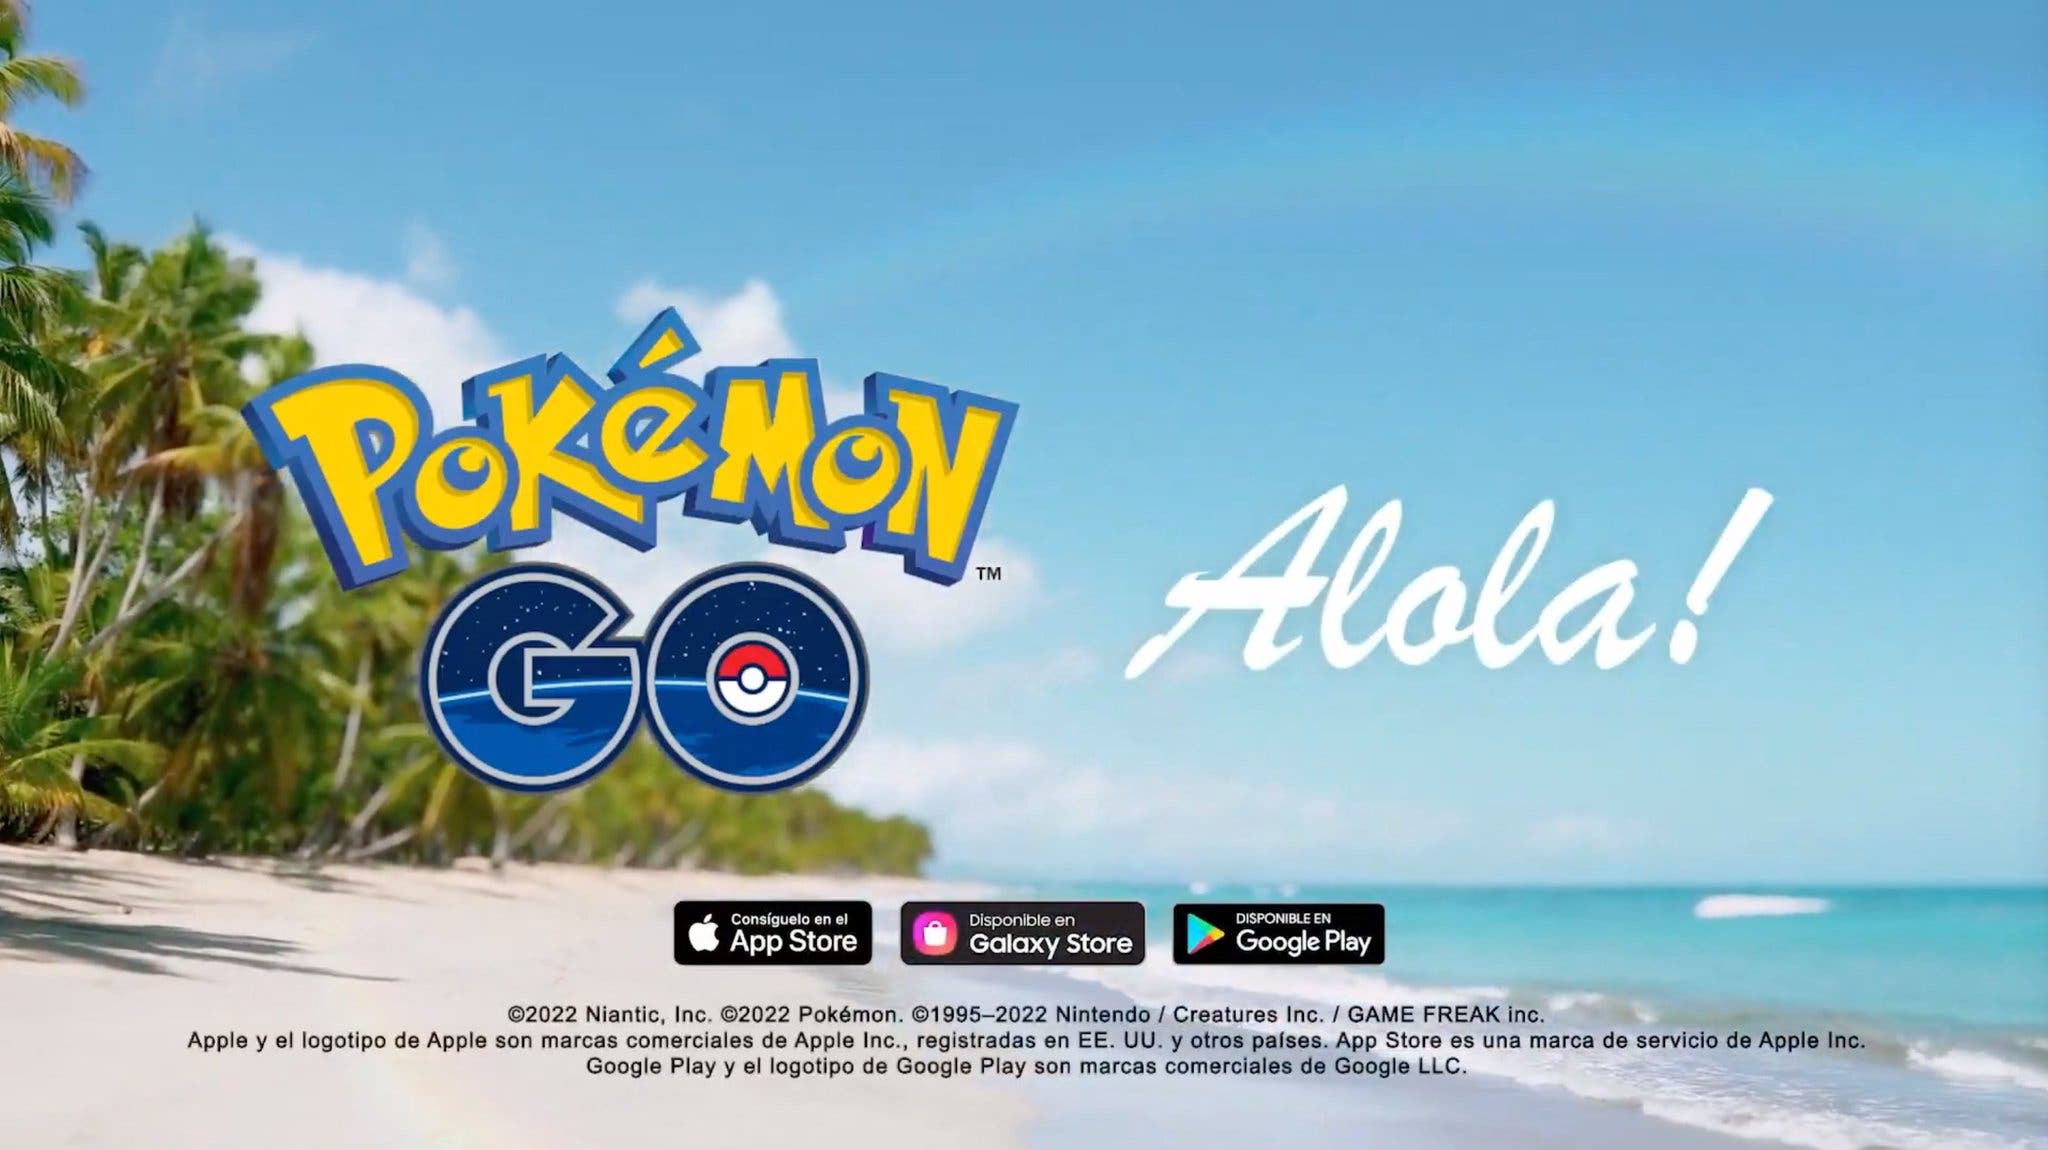 Pokémon GO confirma la llegada de Pokémon de Alola